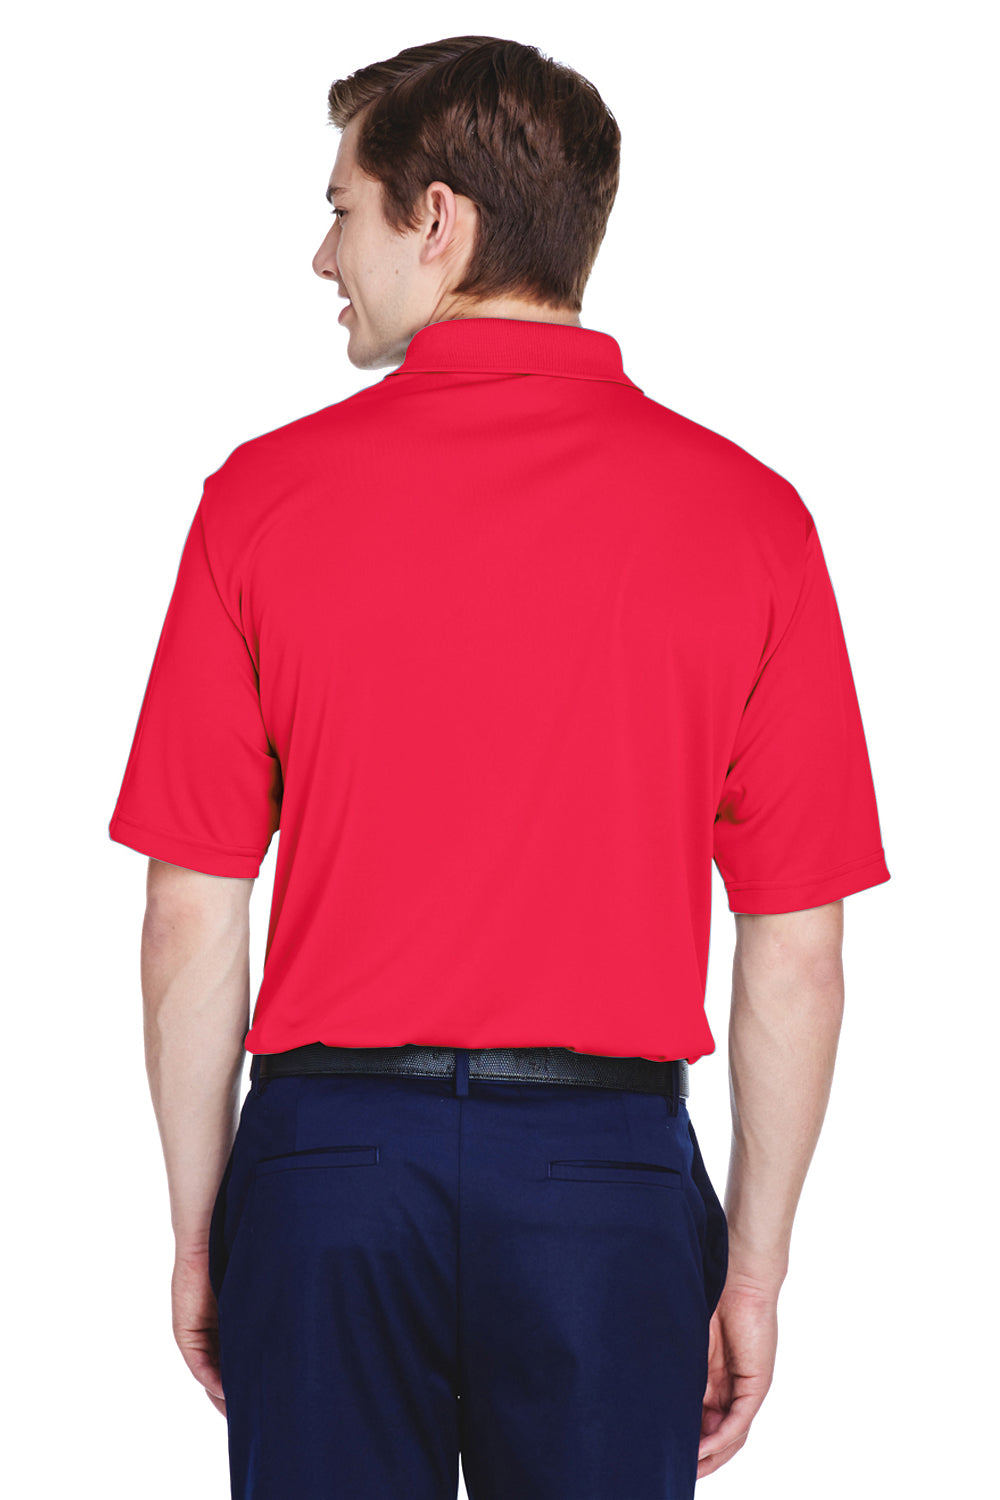 UltraClub 8610 Mens Cool & Dry 8 Star Elite Performance Moisture Wicking Short Sleeve Polo Shirt Red Back